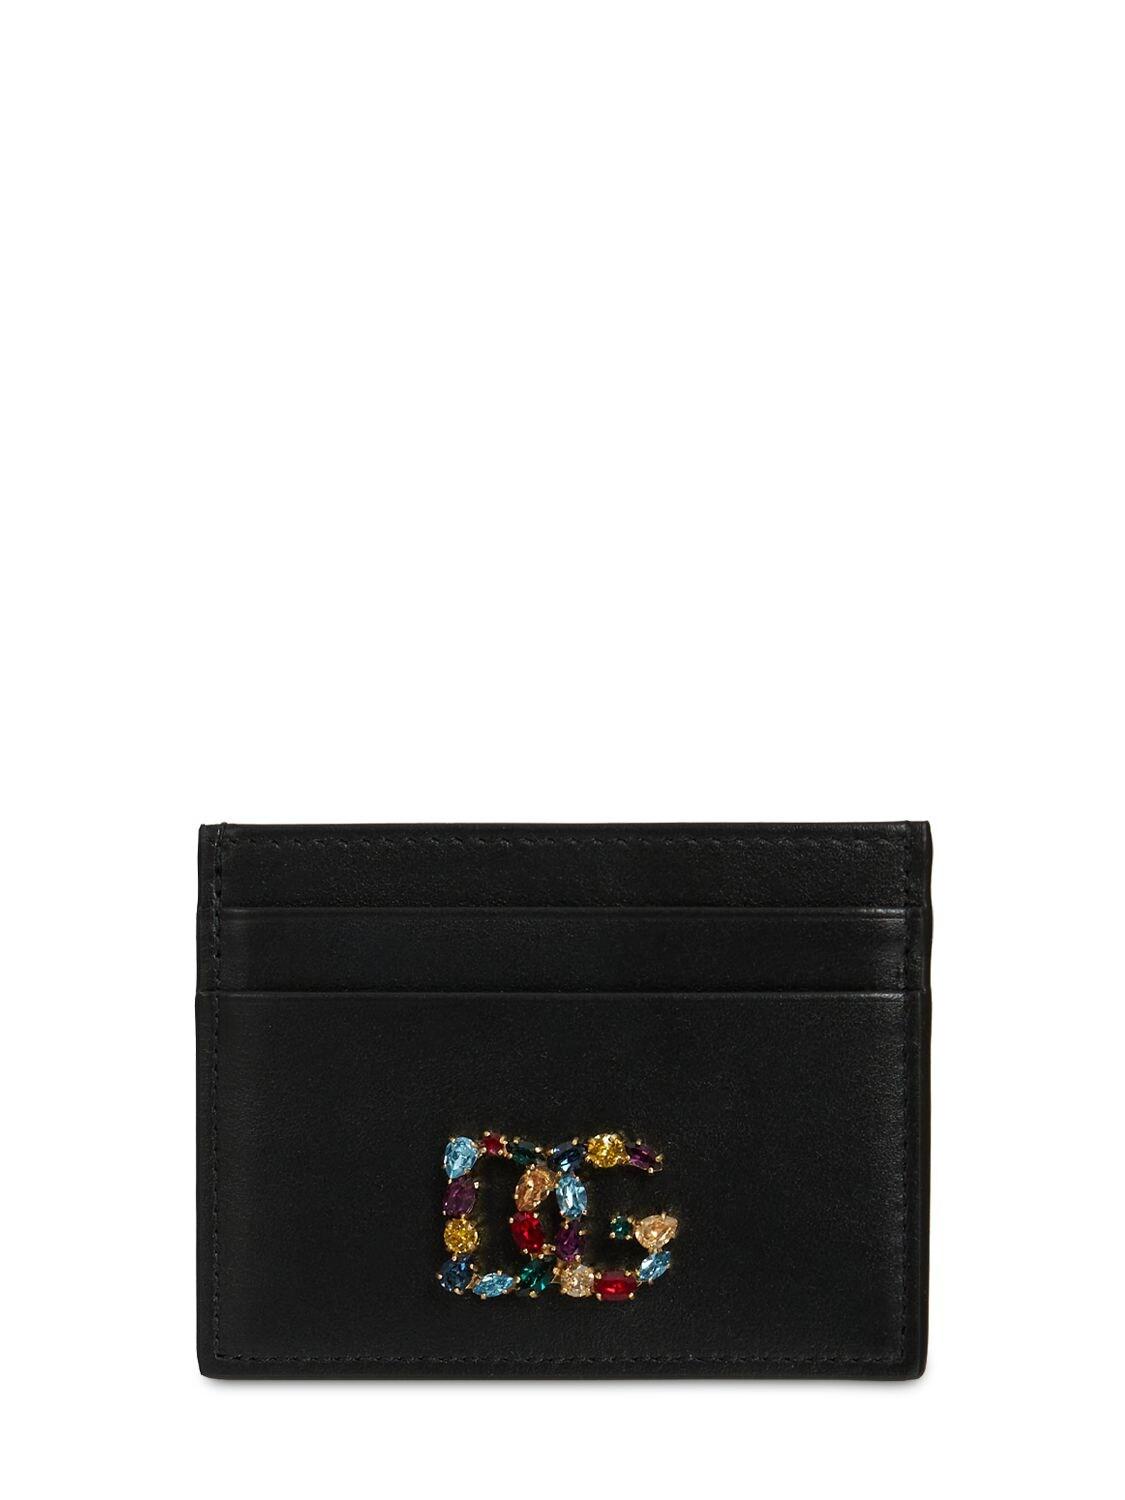 Dolce & Gabbana Dg Crystal Leather Card Holder in Black | Lyst